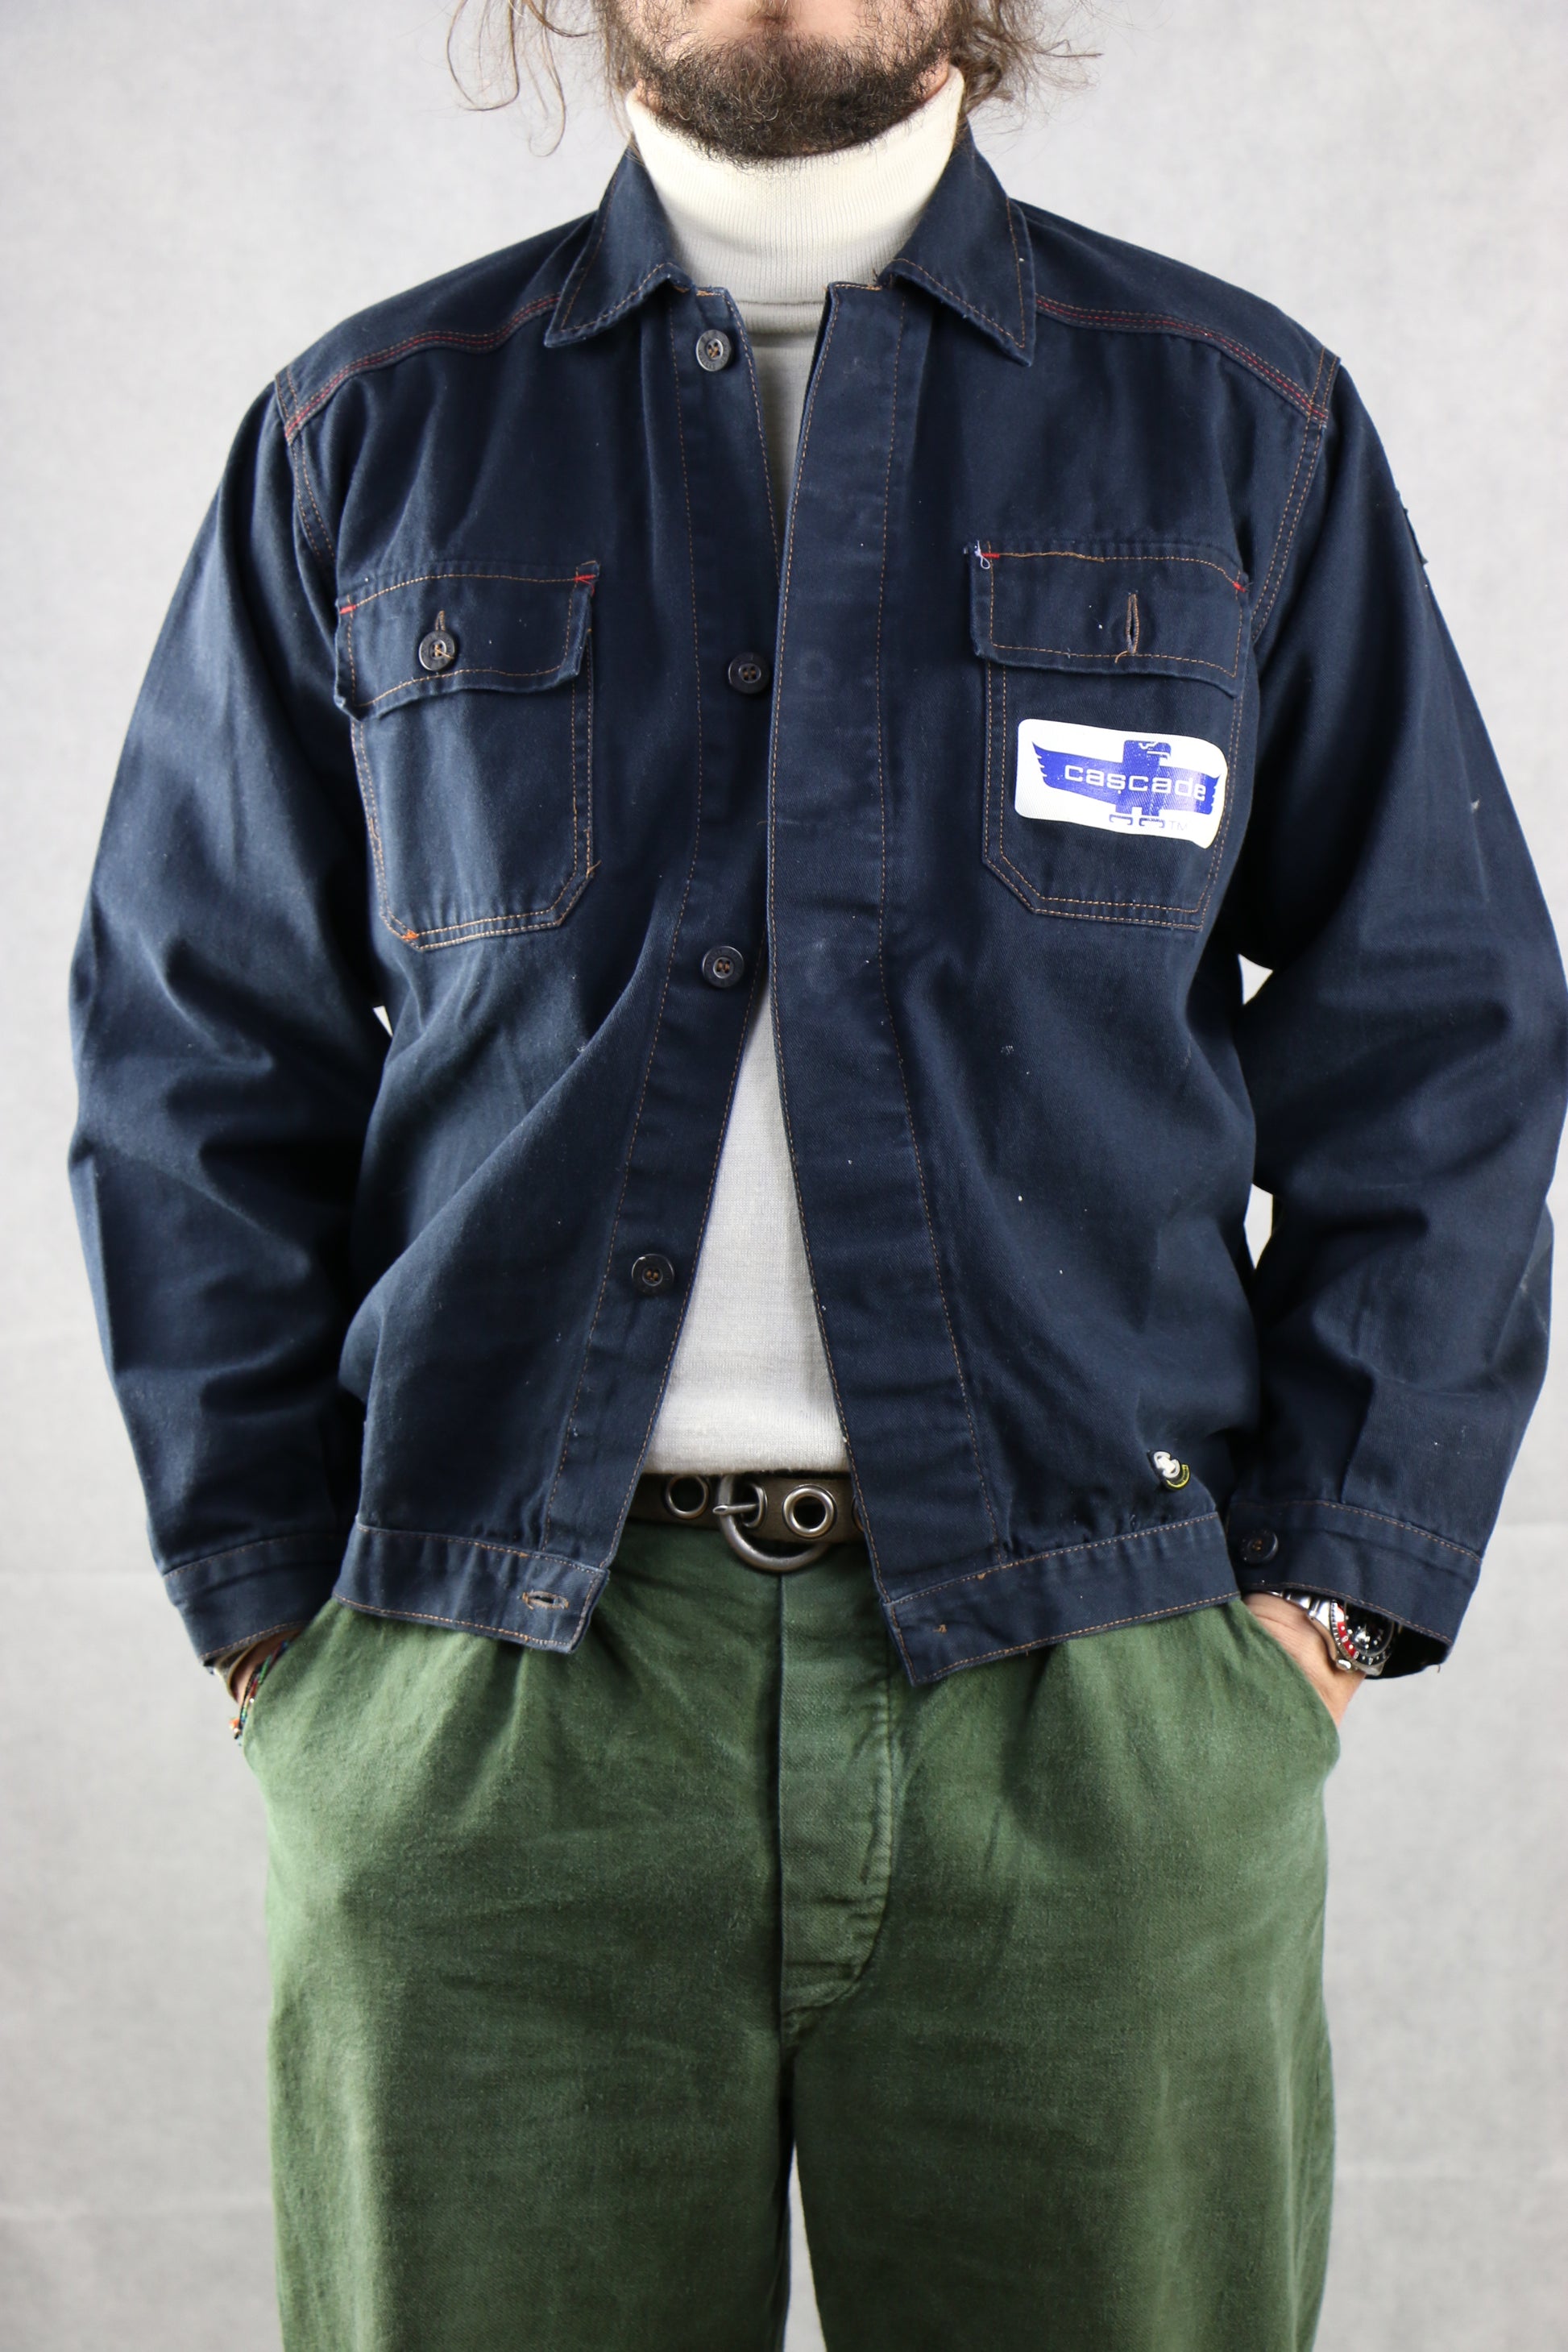 SIR Work Jacket M/45 - vintage clothing clochard92.com